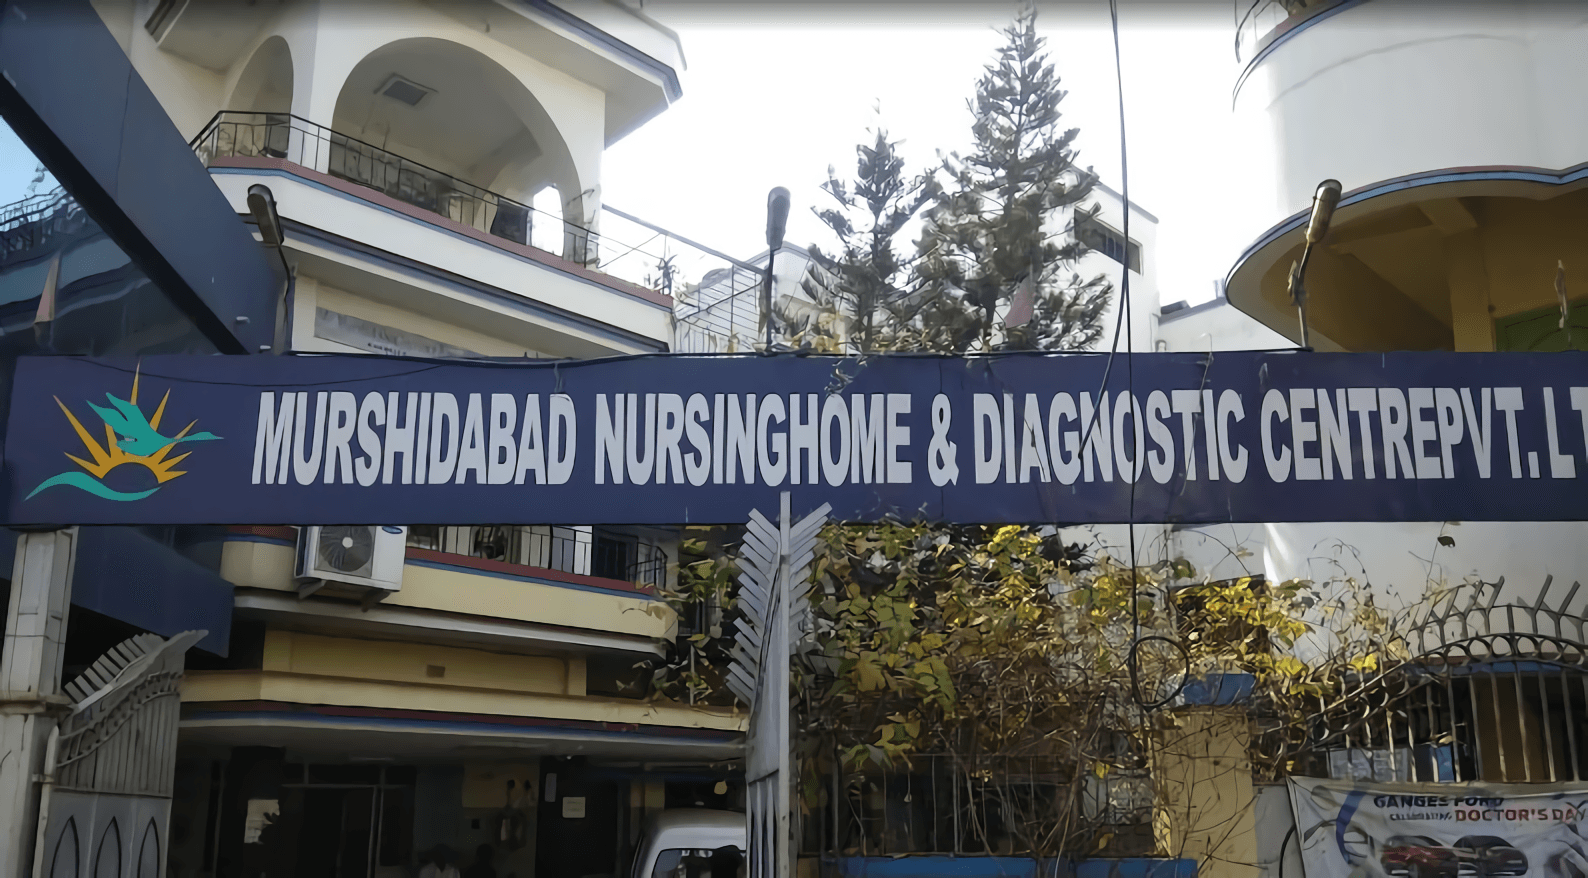 Murshidabad Nursinghome & Diagnostic Centre Pvt Ltd